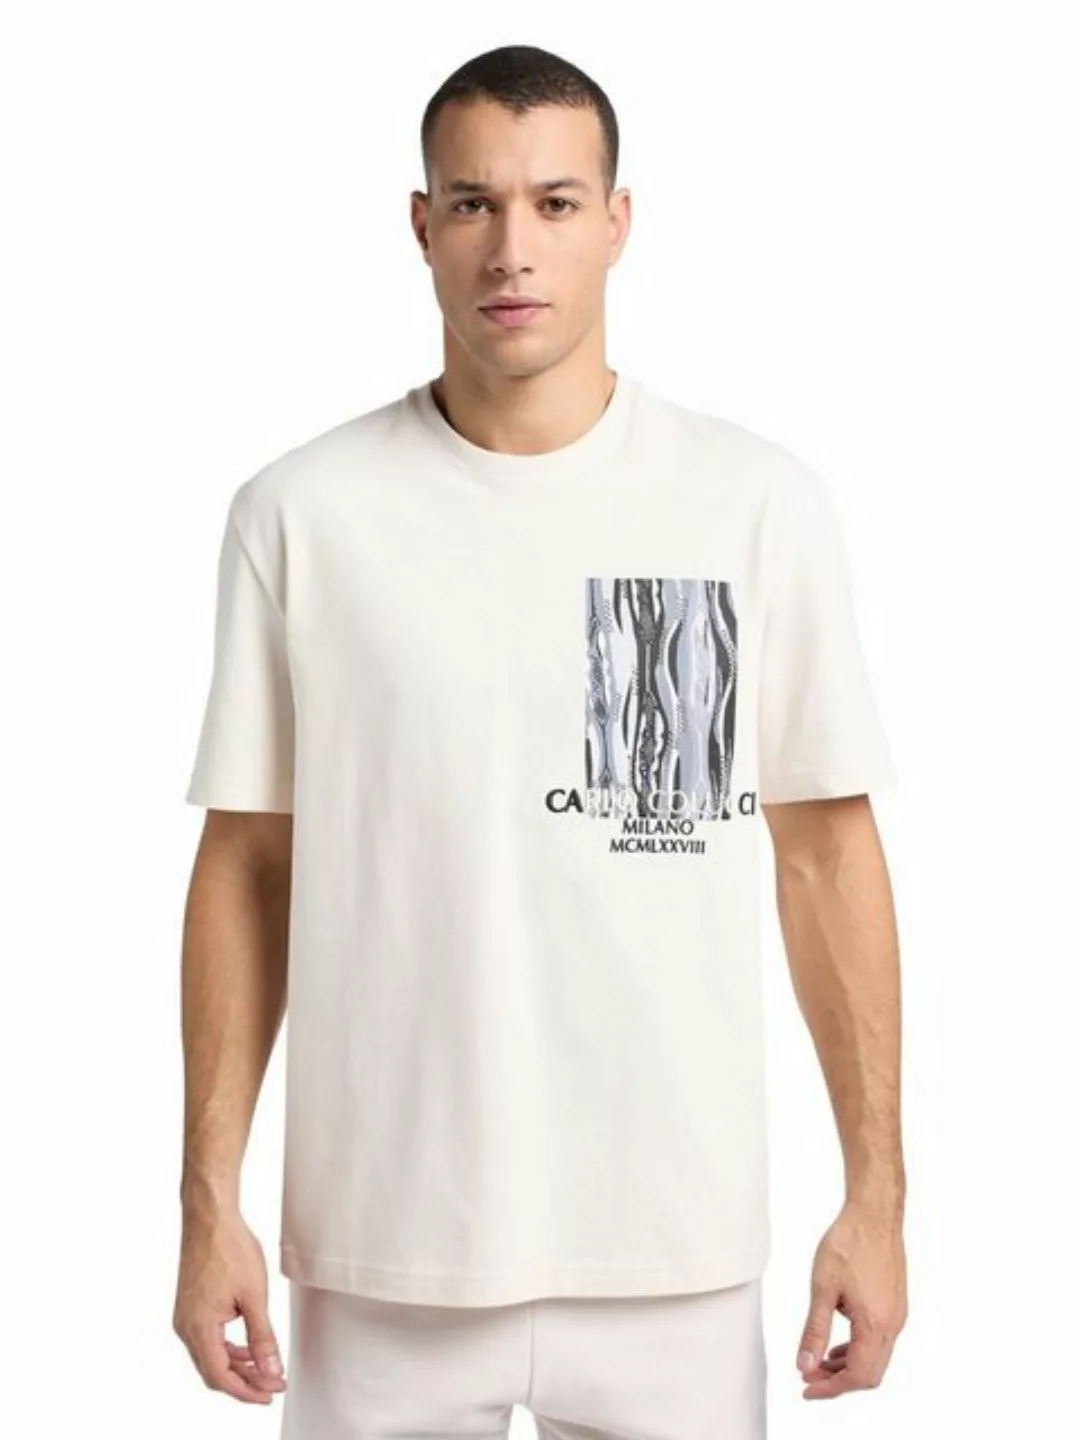 CARLO COLUCCI T-Shirt De Pandis günstig online kaufen